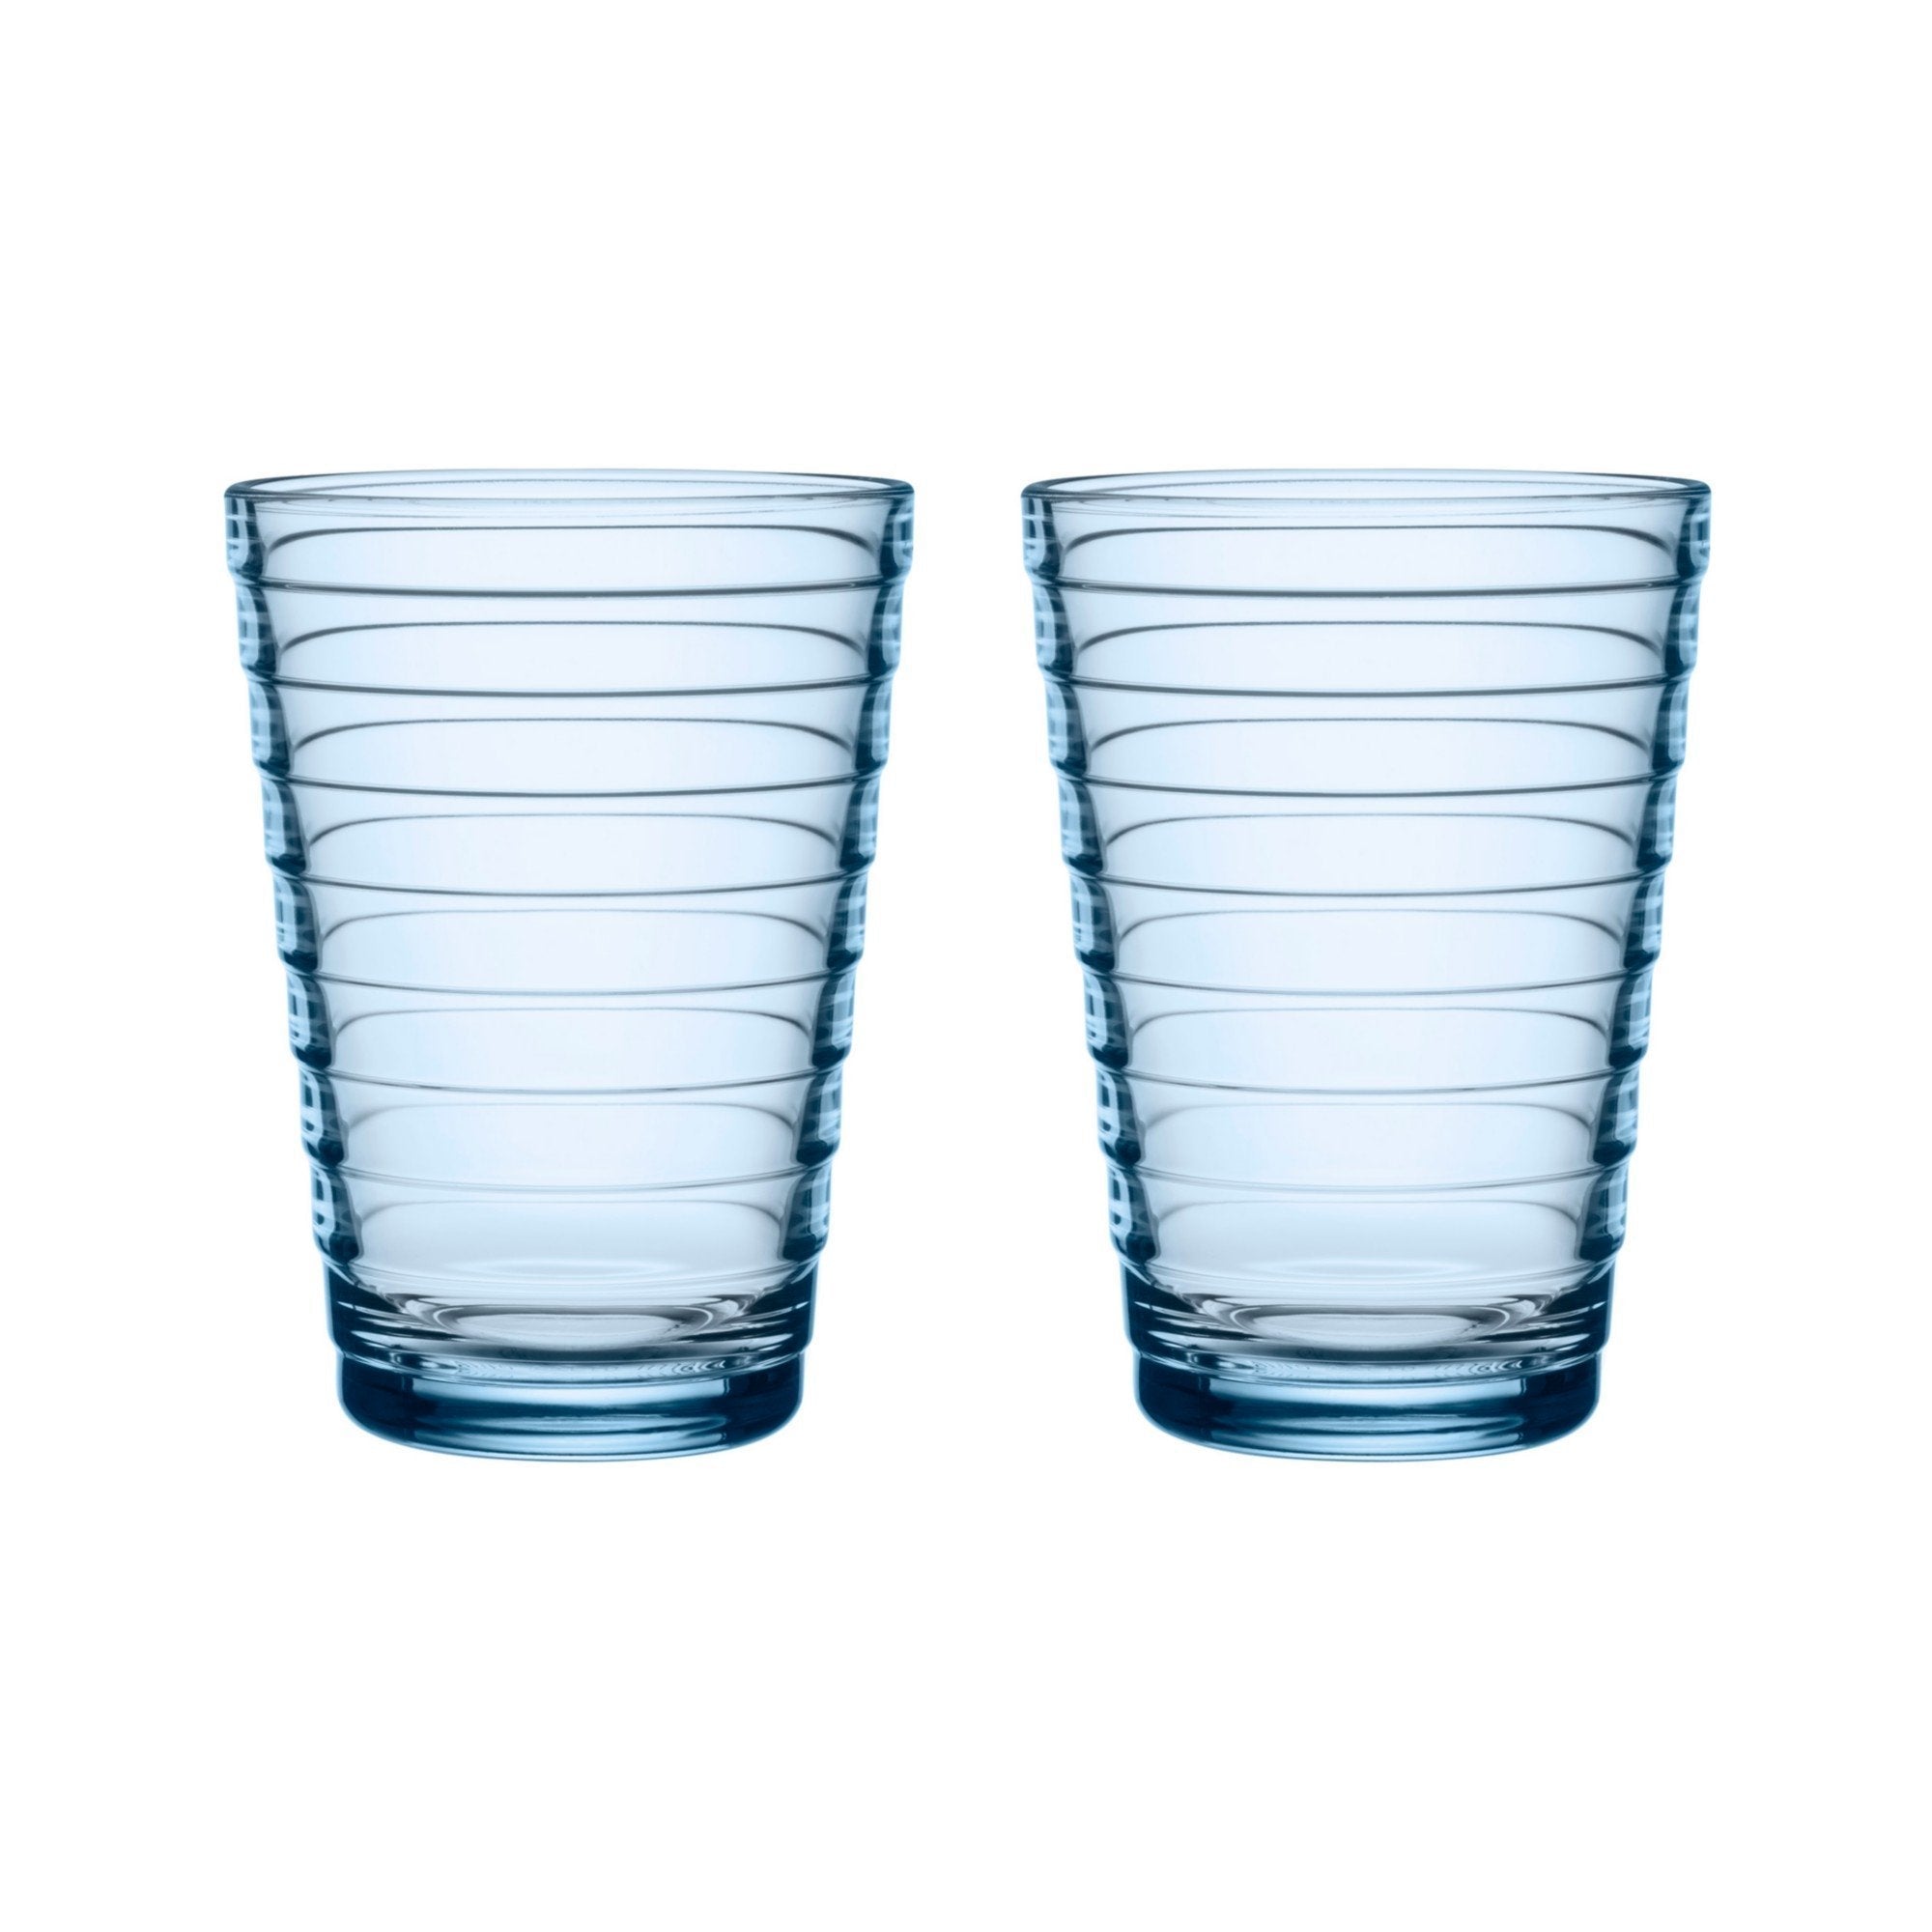 Iittala Aino Aalto Drinkglas Aqua 33Cl, 2pcs.